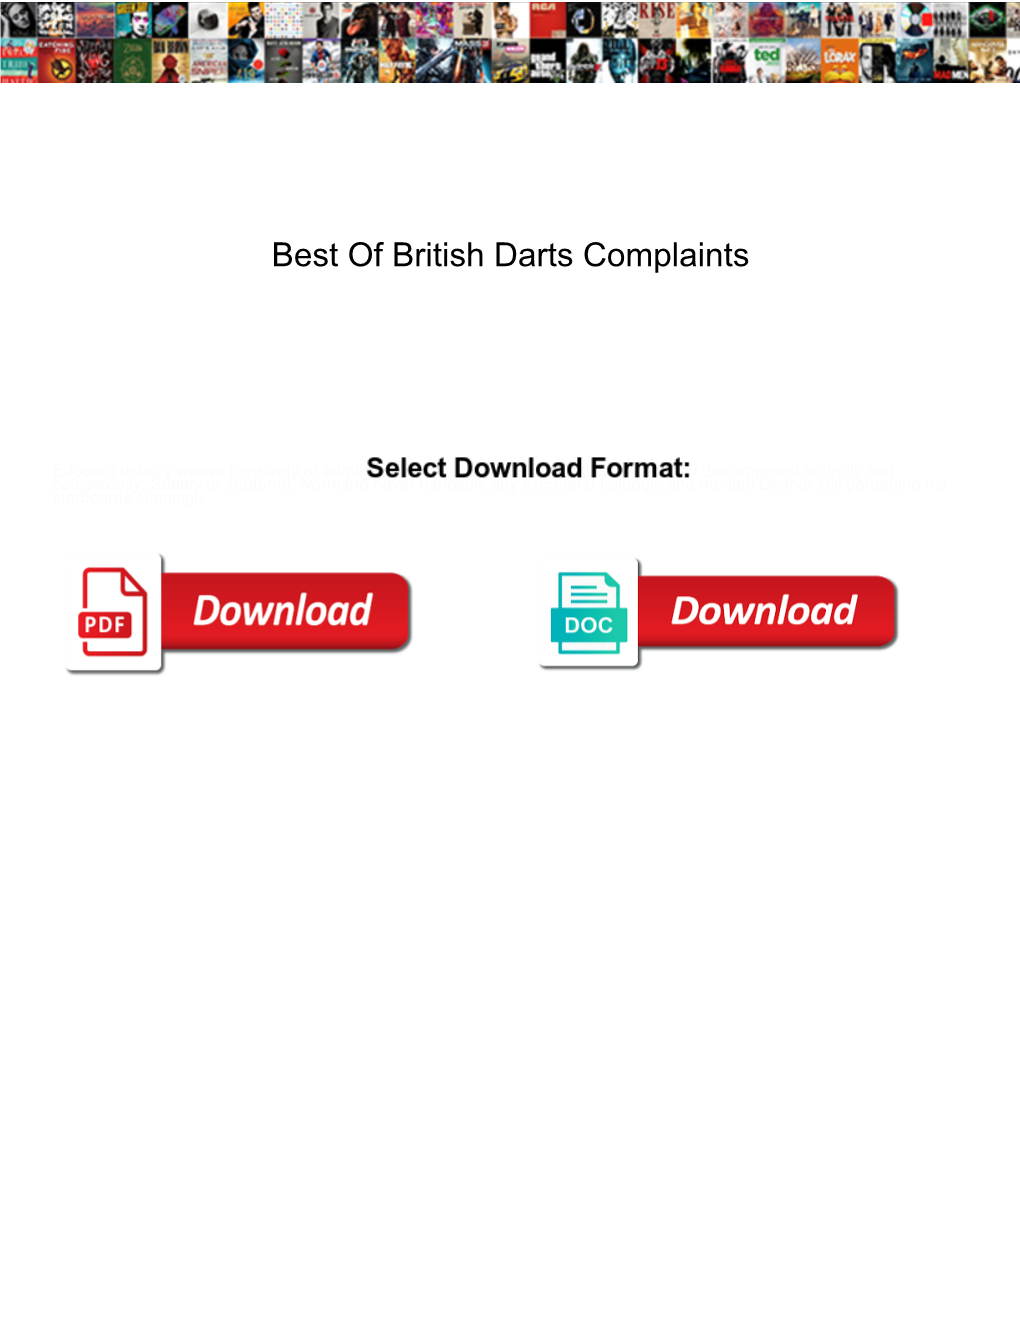 Best of British Darts Complaints